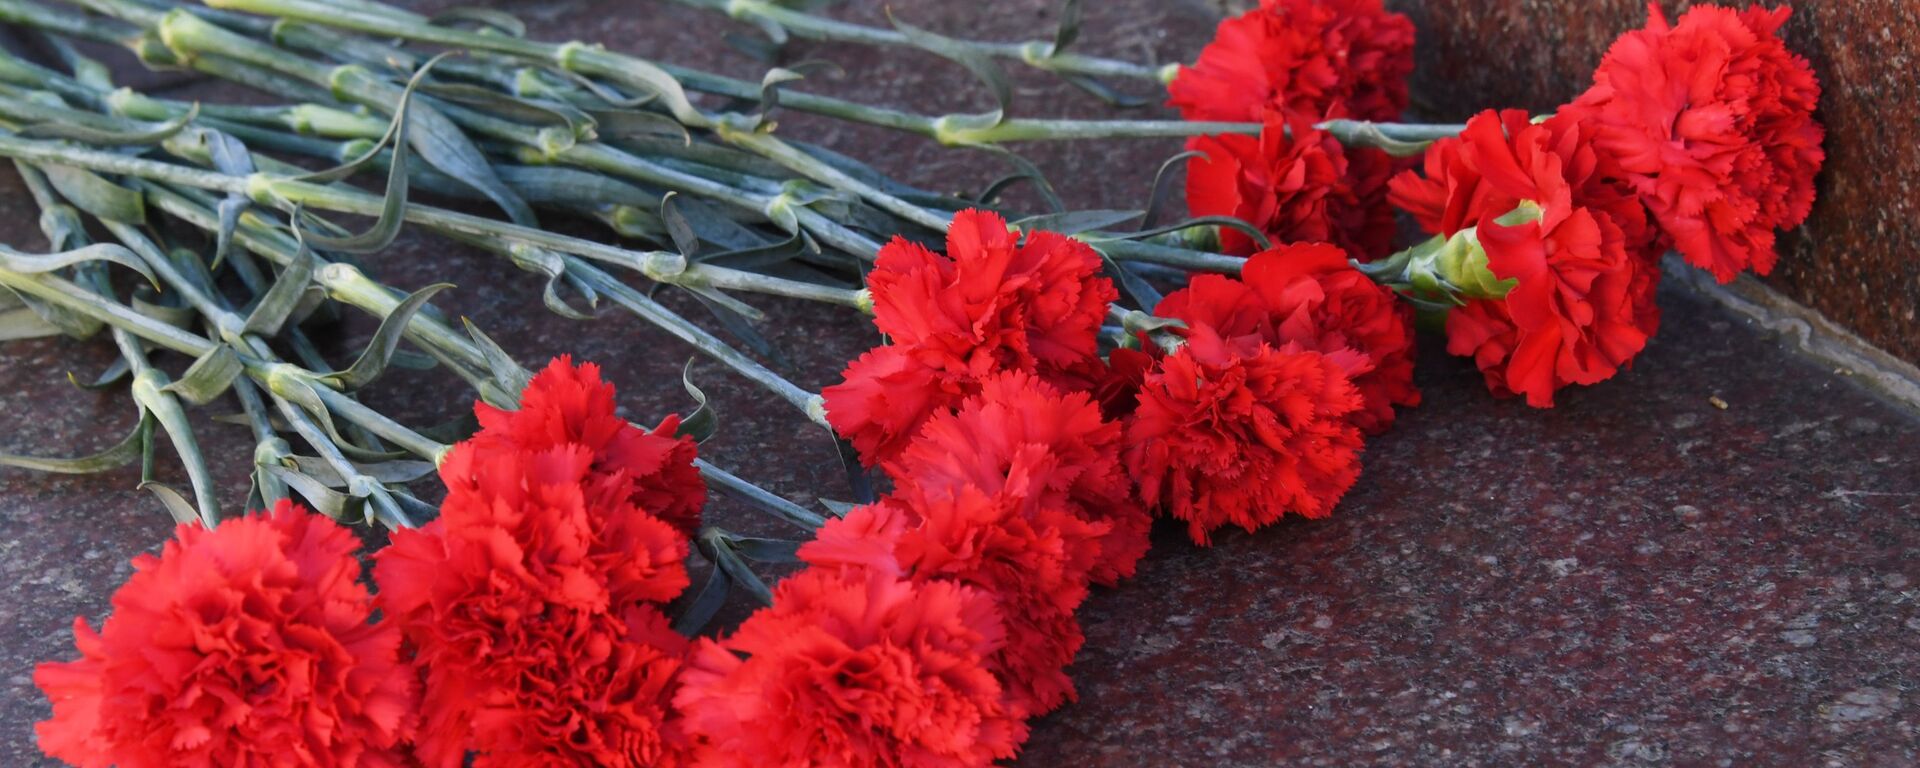 Акции памяти о погибших при нападении на колледж в Керчи - Sputnik Таджикистан, 1920, 02.08.2021